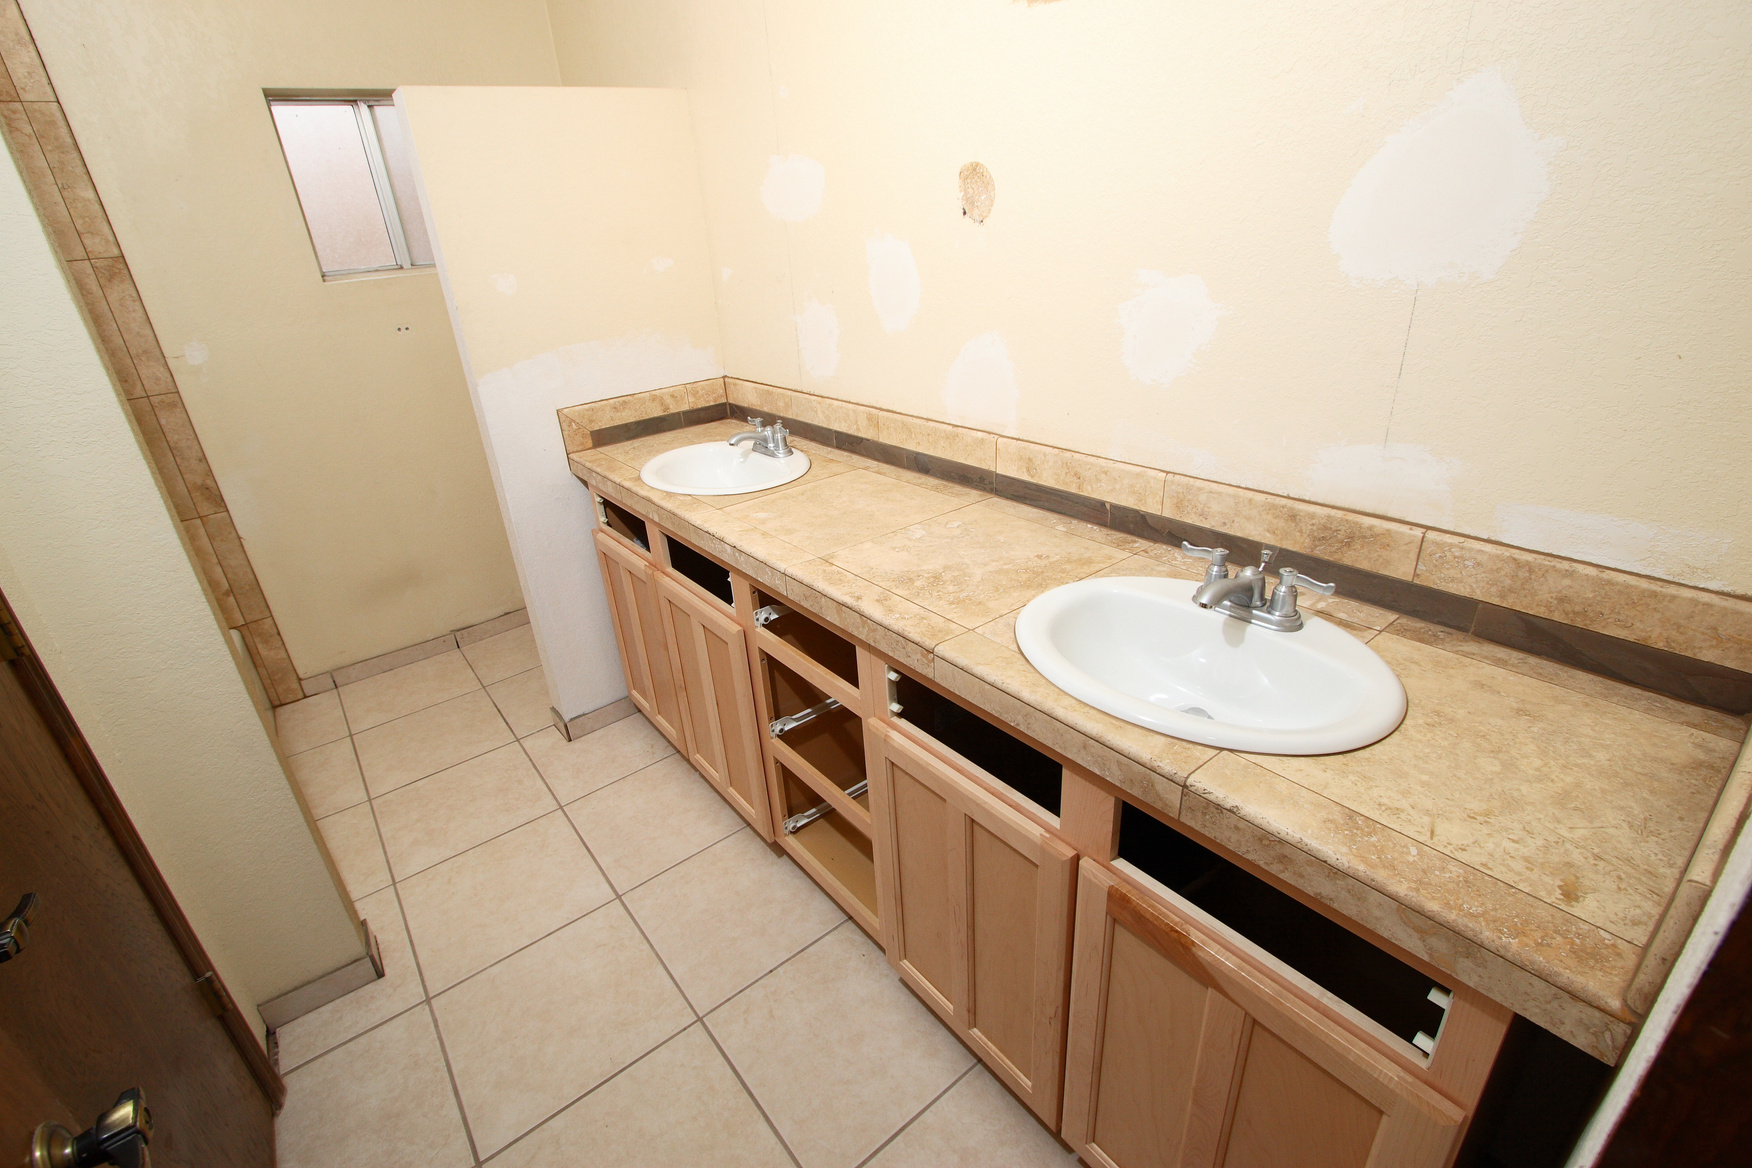 Bathroom Remodel Series 6: Countertop Tile